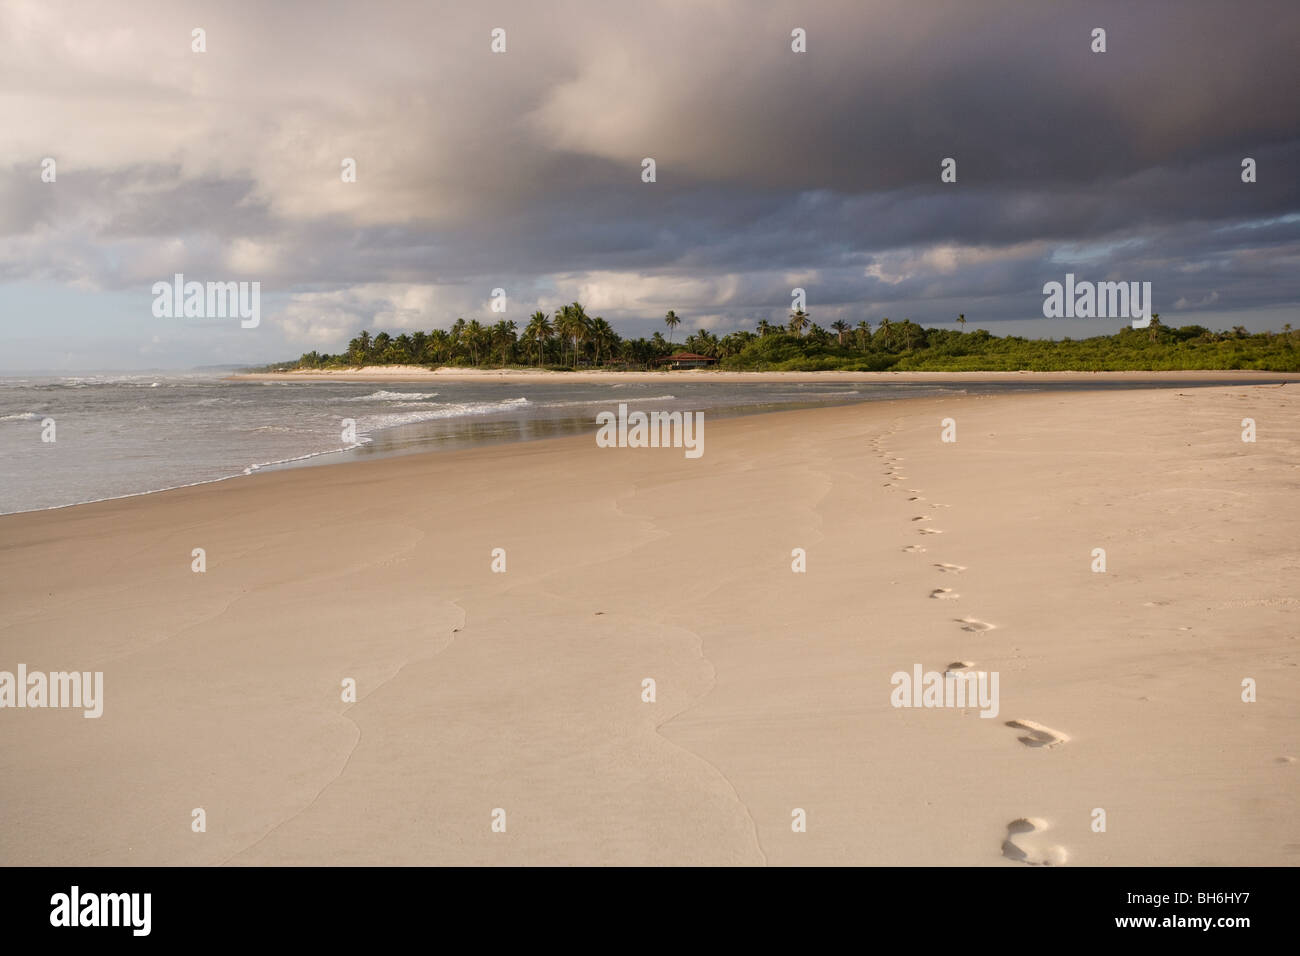 Foot prints on tropical beach at dawn Stock Photo